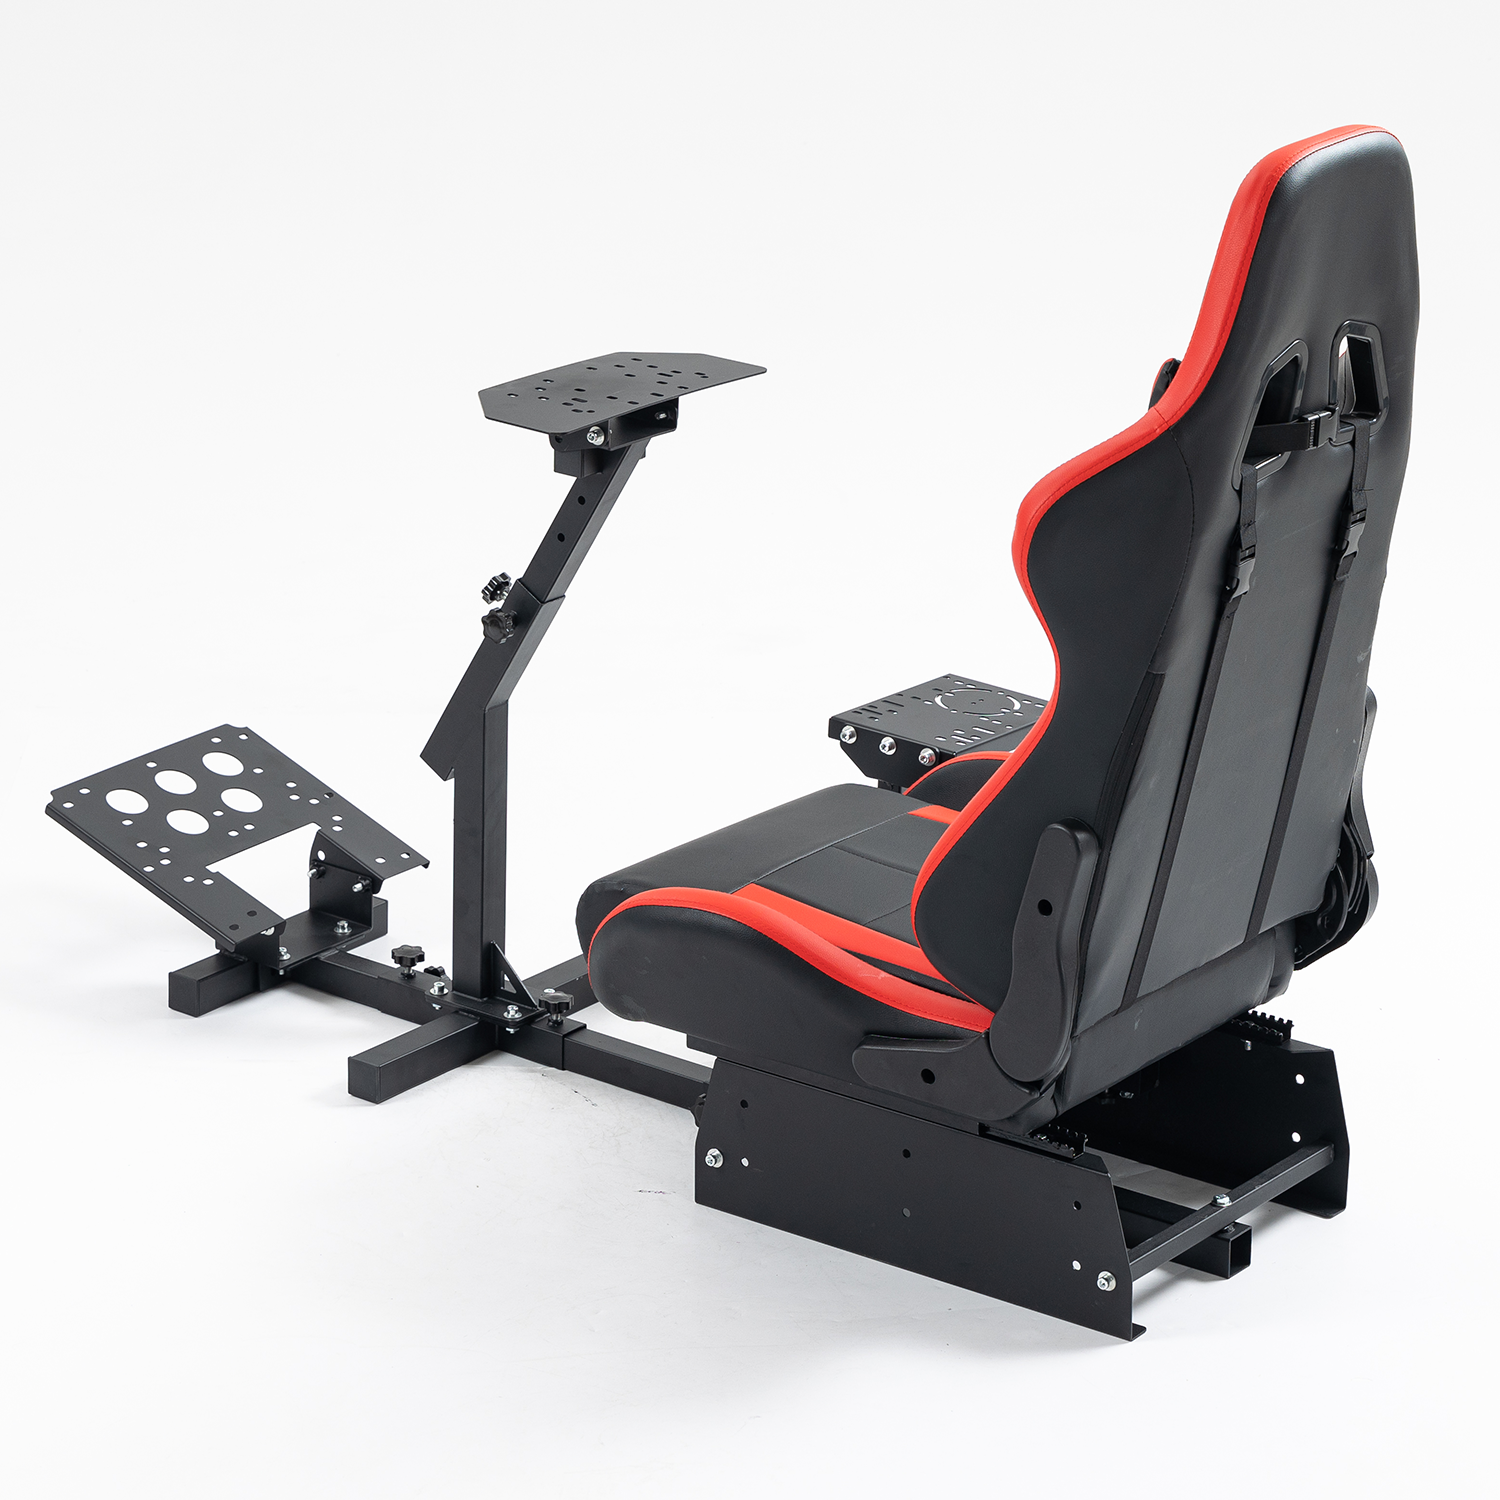 Minneer New Upgrade Racing Simulator Cockpit with Seat Fit Logitech Thrustmaster